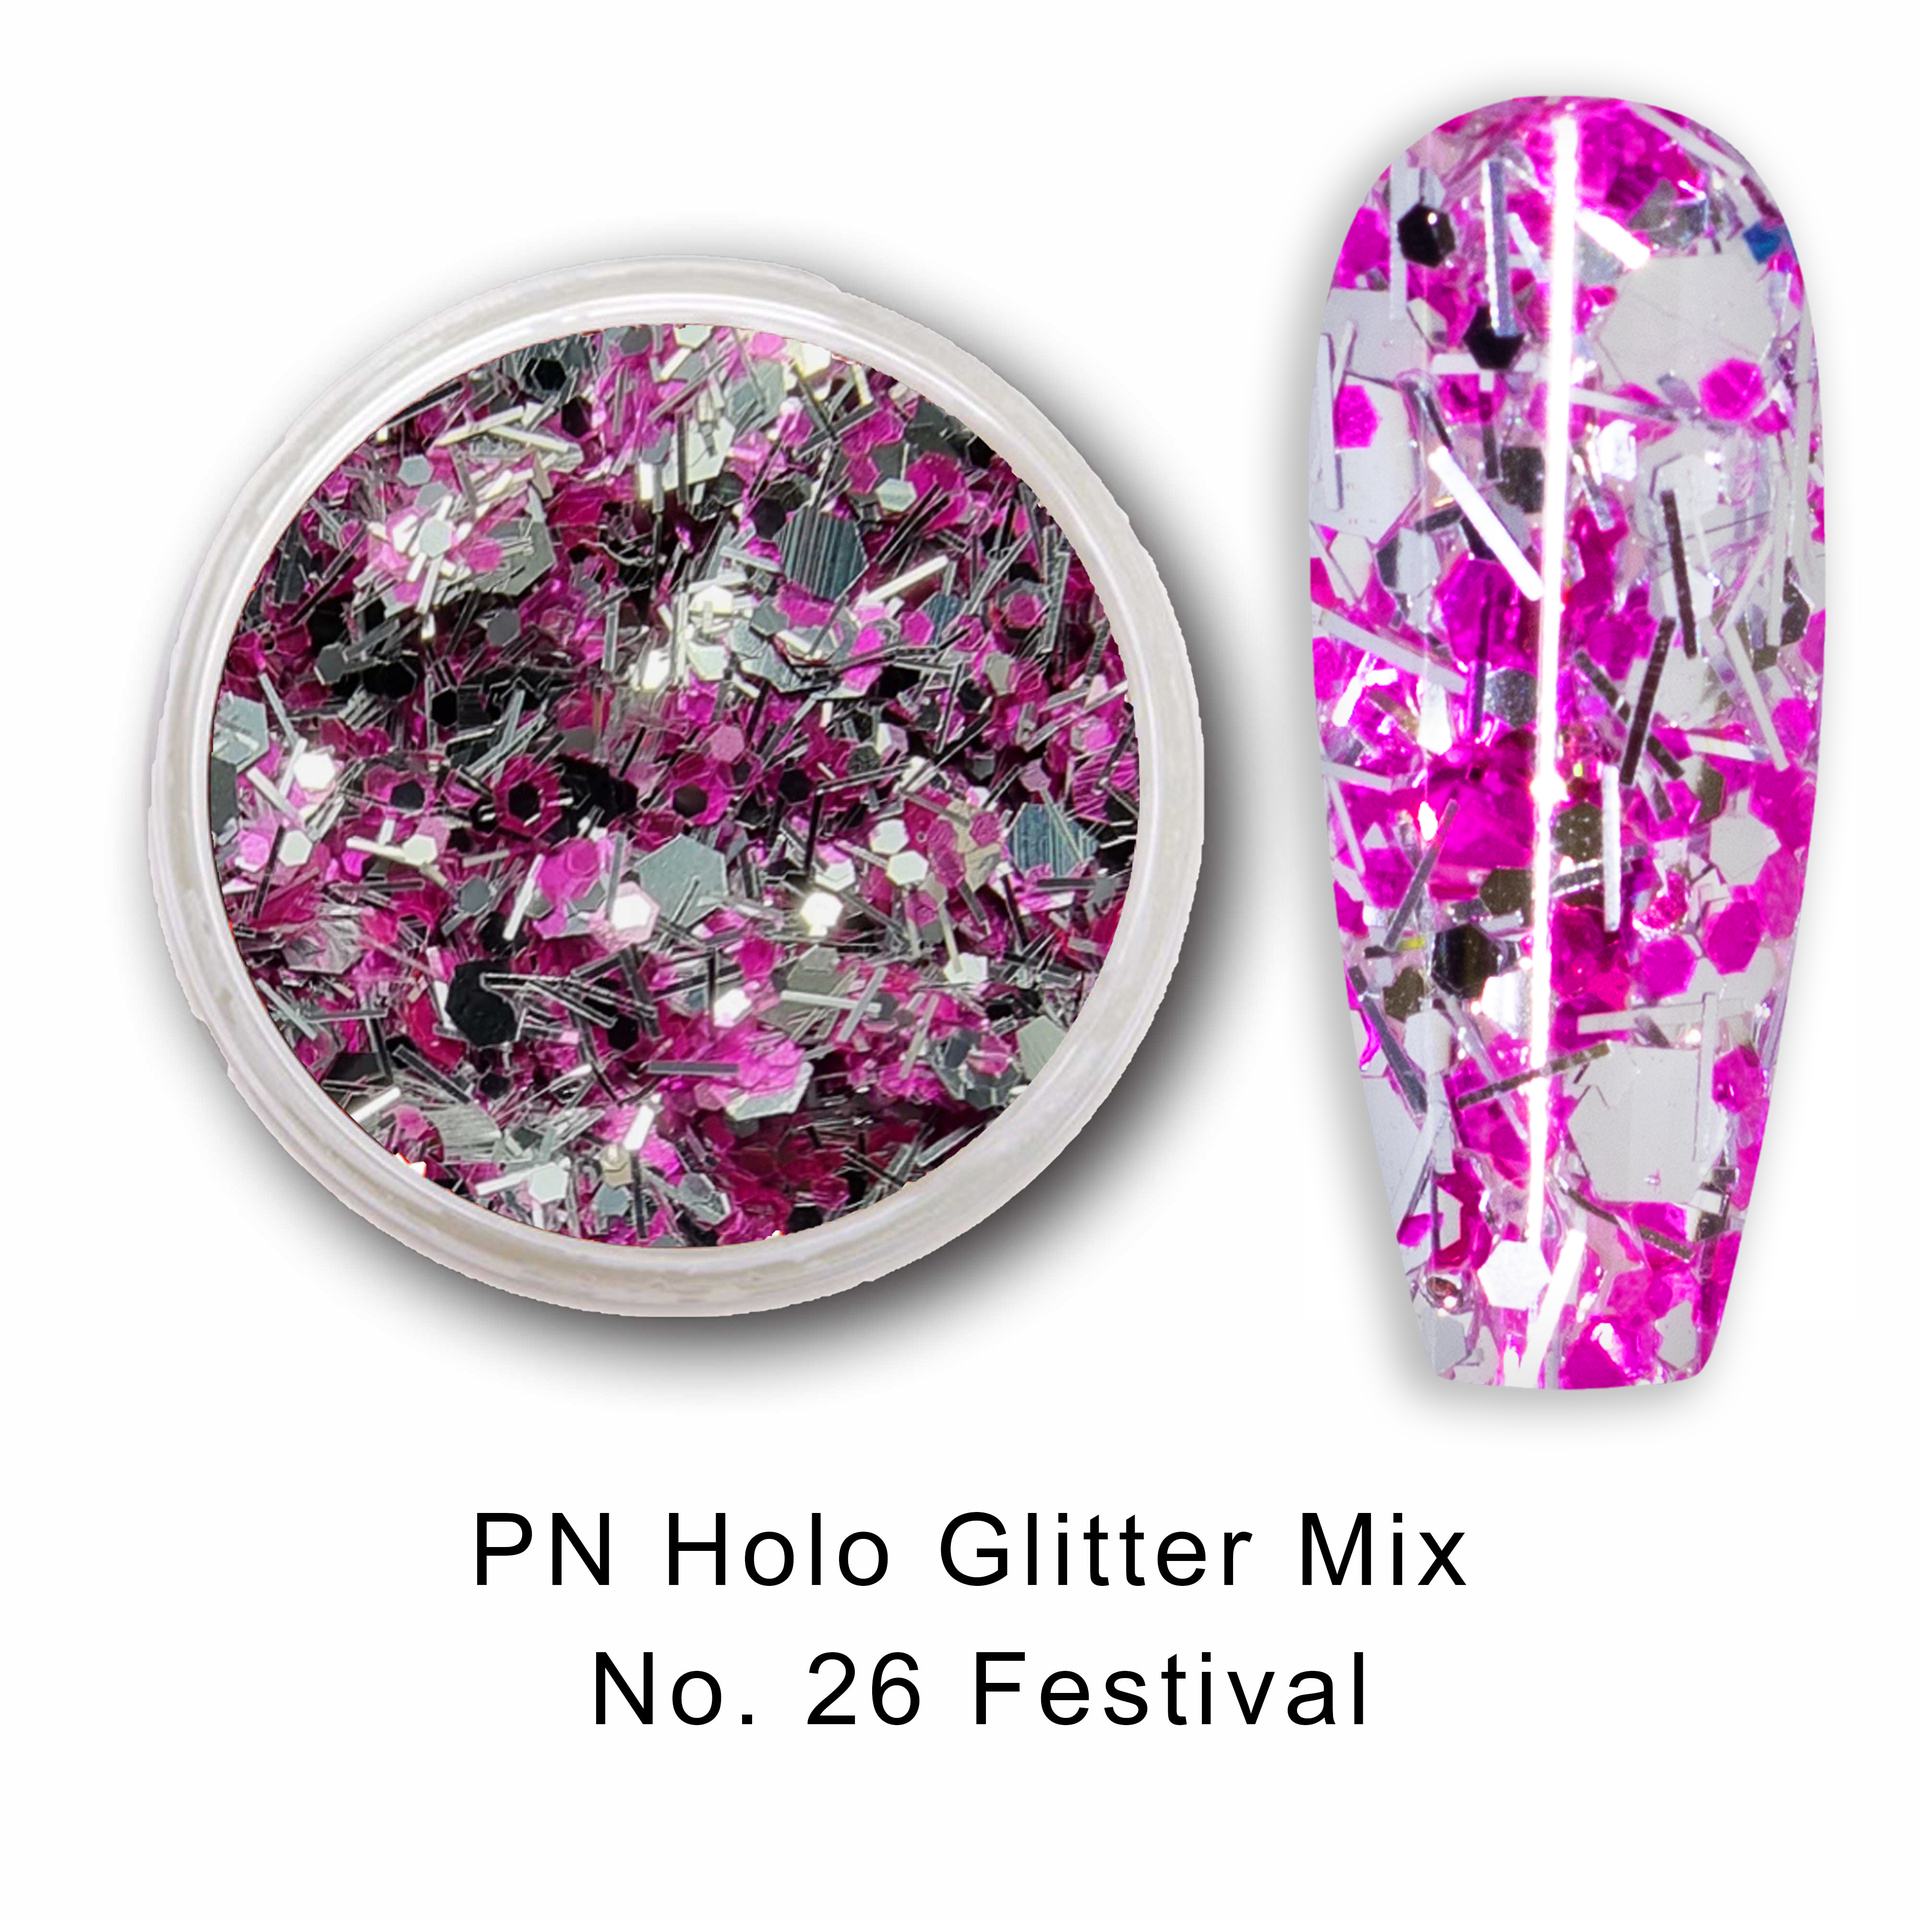 PN Holo glitter mix No.26 Festival